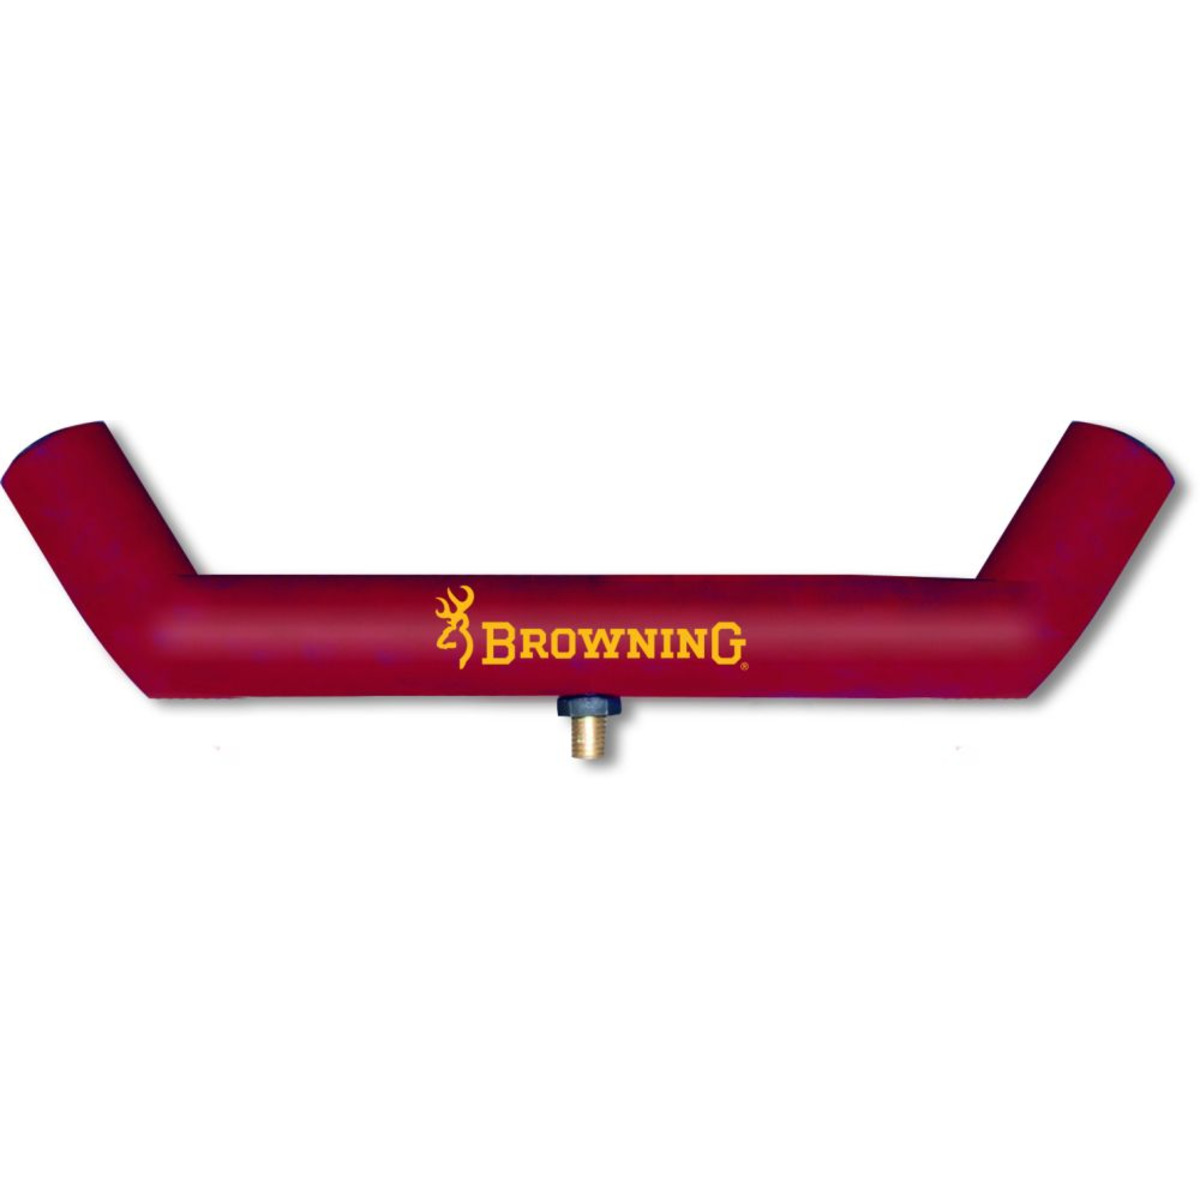 Browning Feeder Rod Rest - 35 cm